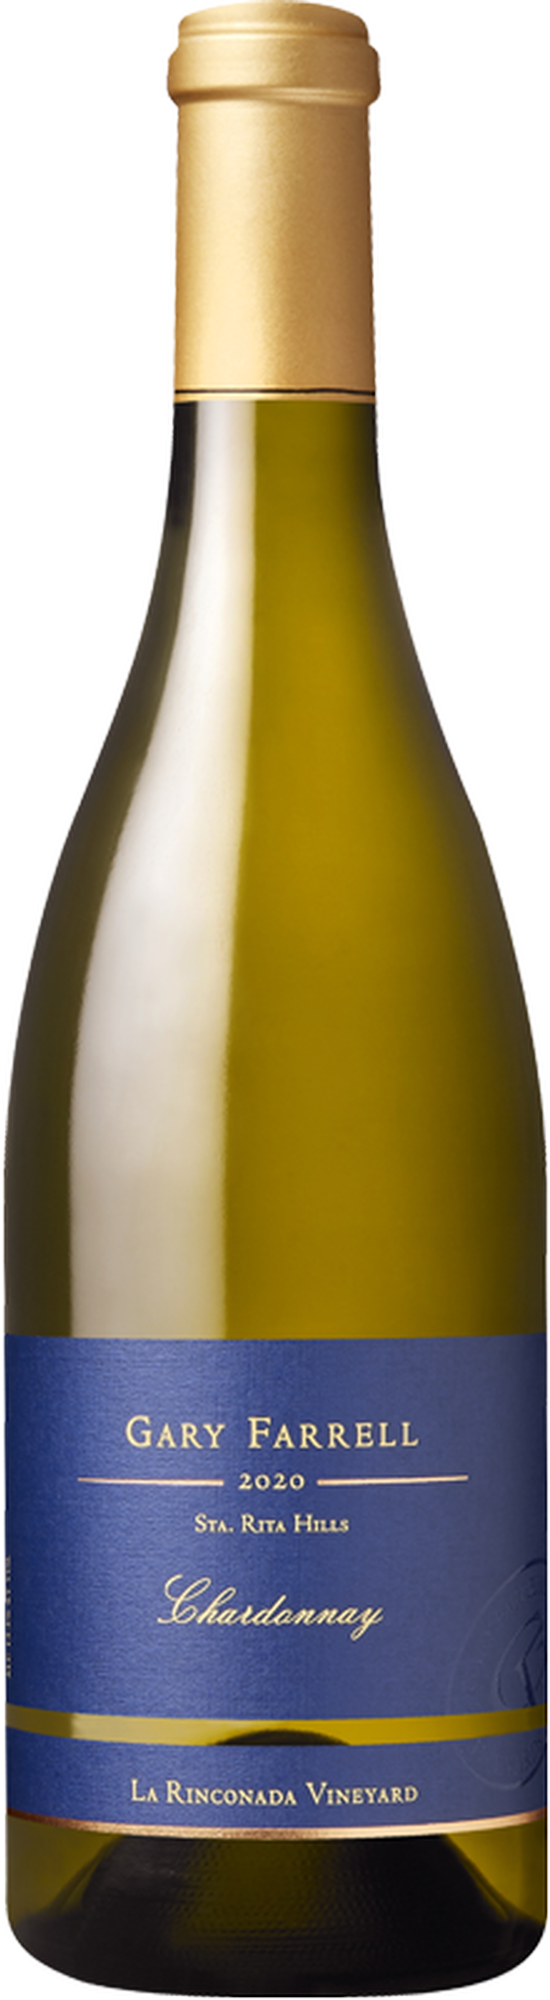 2020 La Rinconada Vineyard Chardonnay